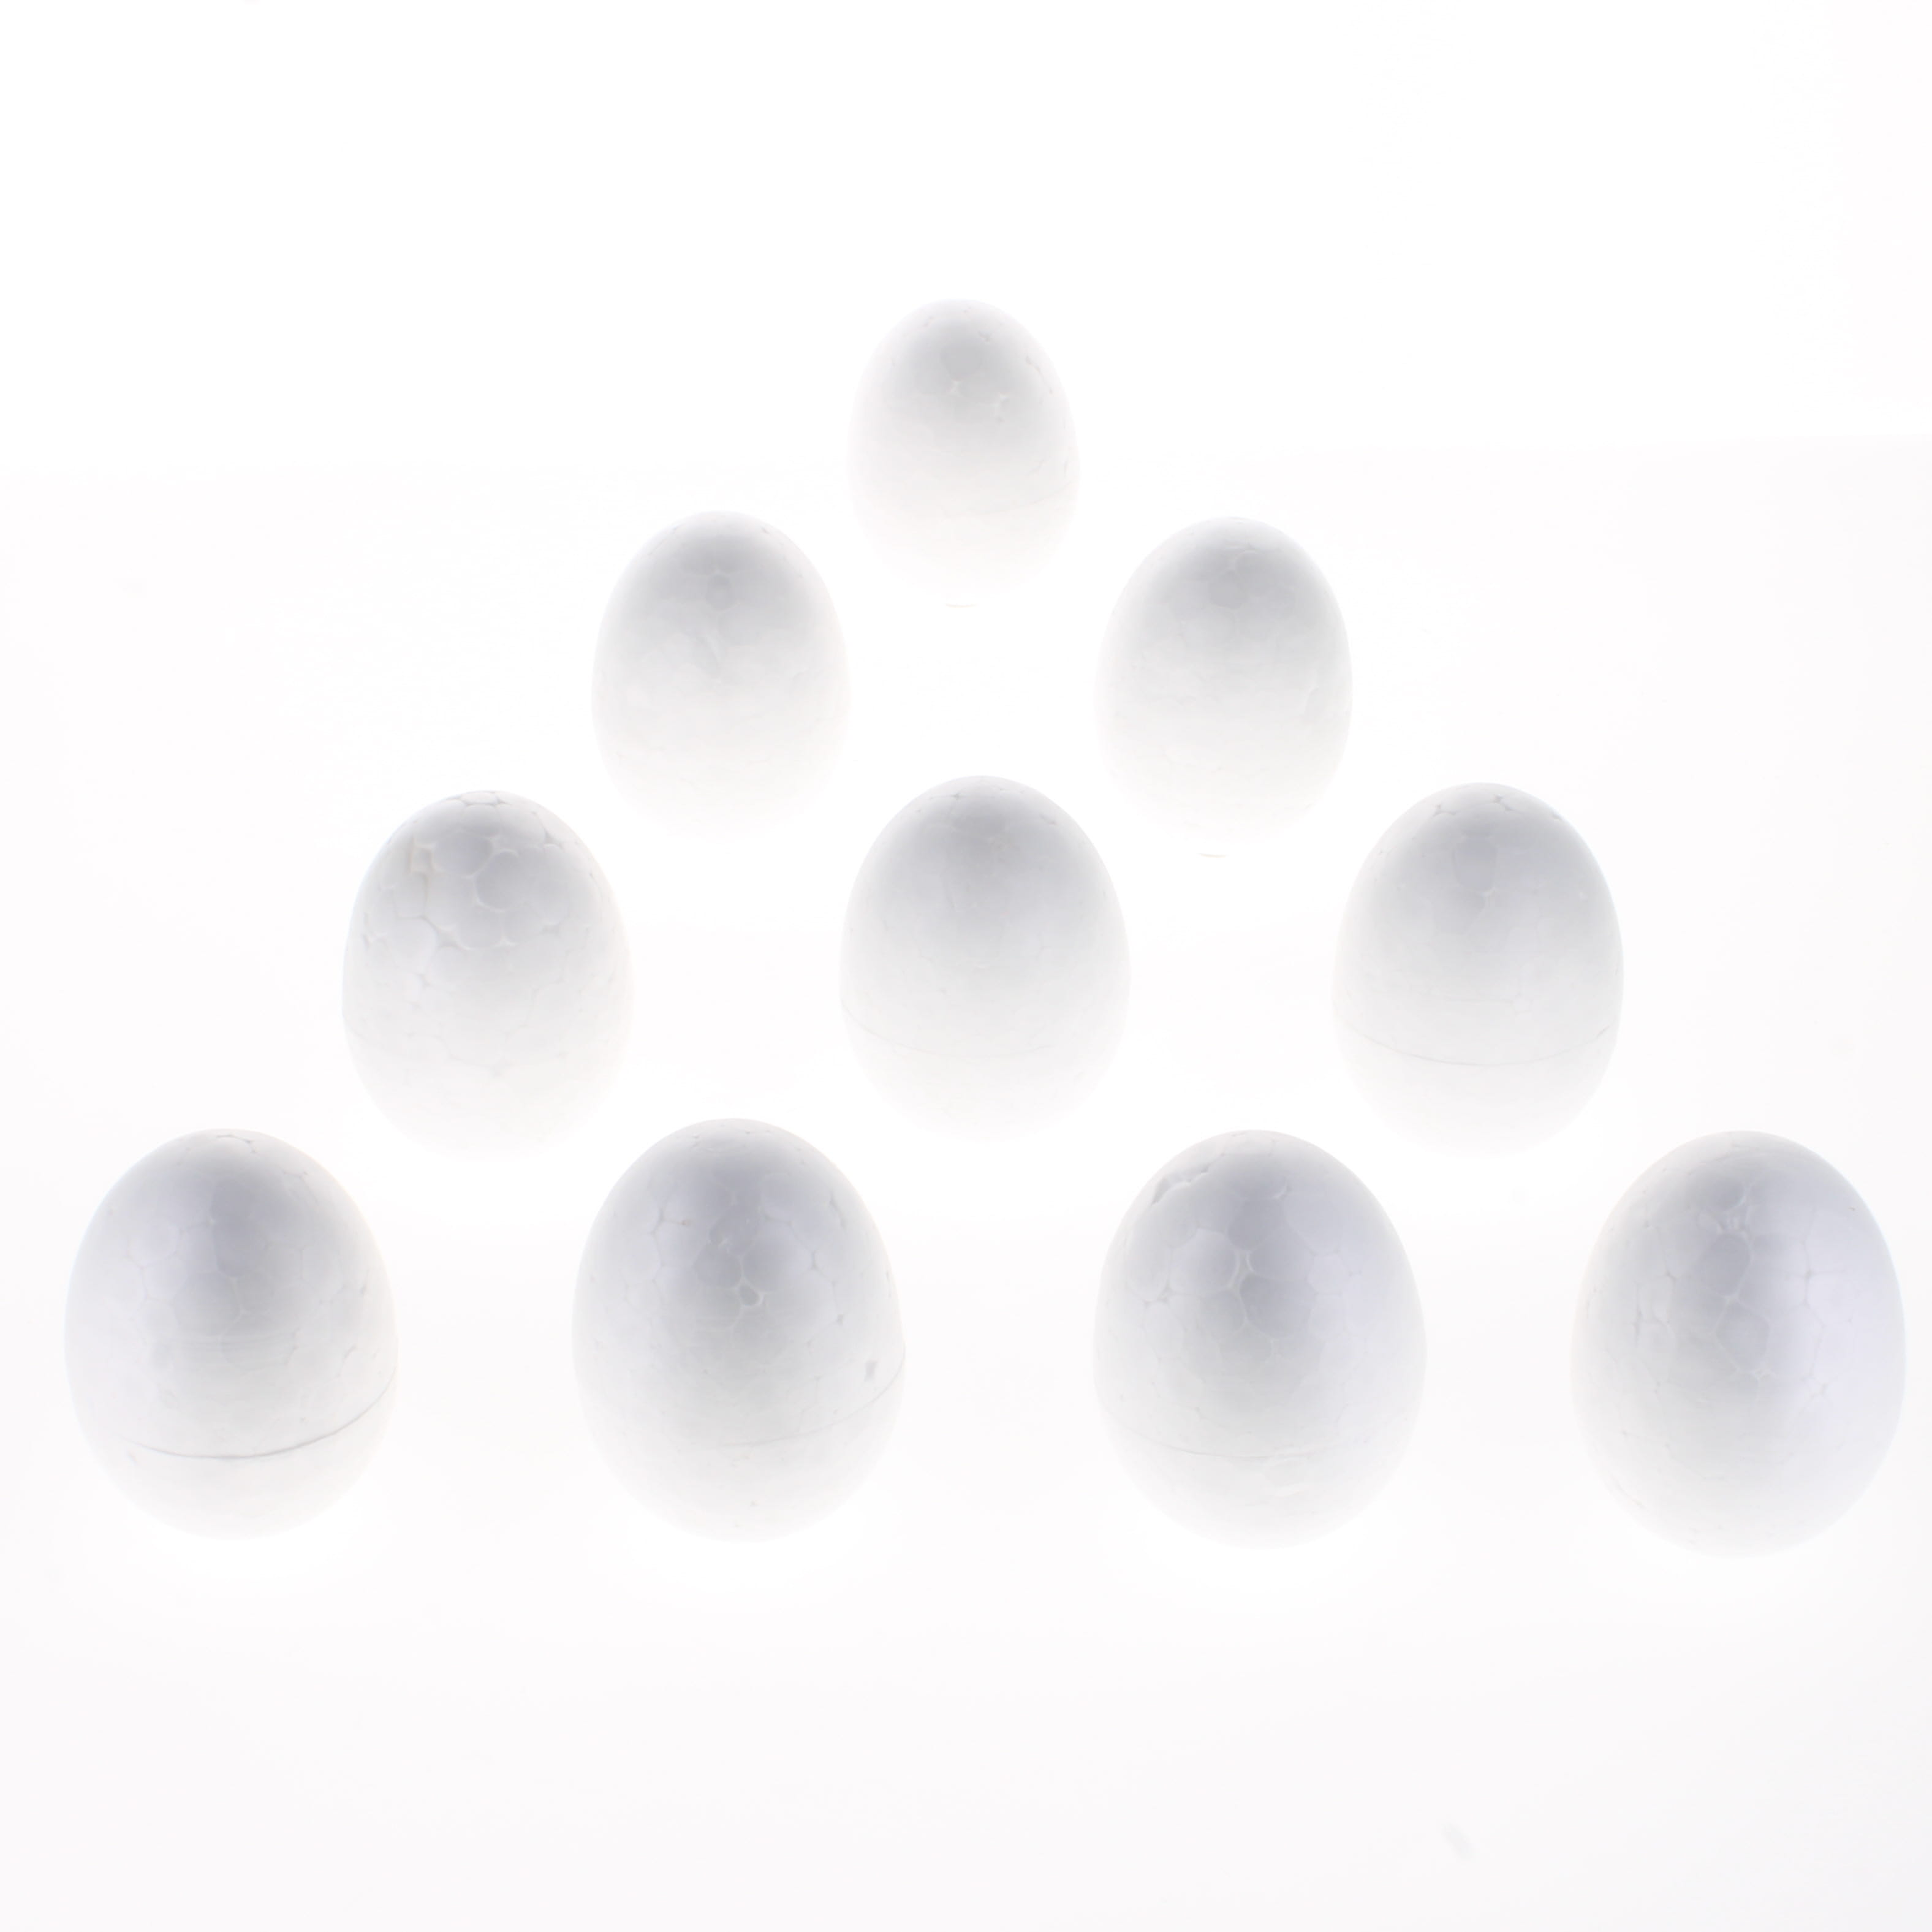 Polystyrene Eggs 50mm - pack of 10 - STC127